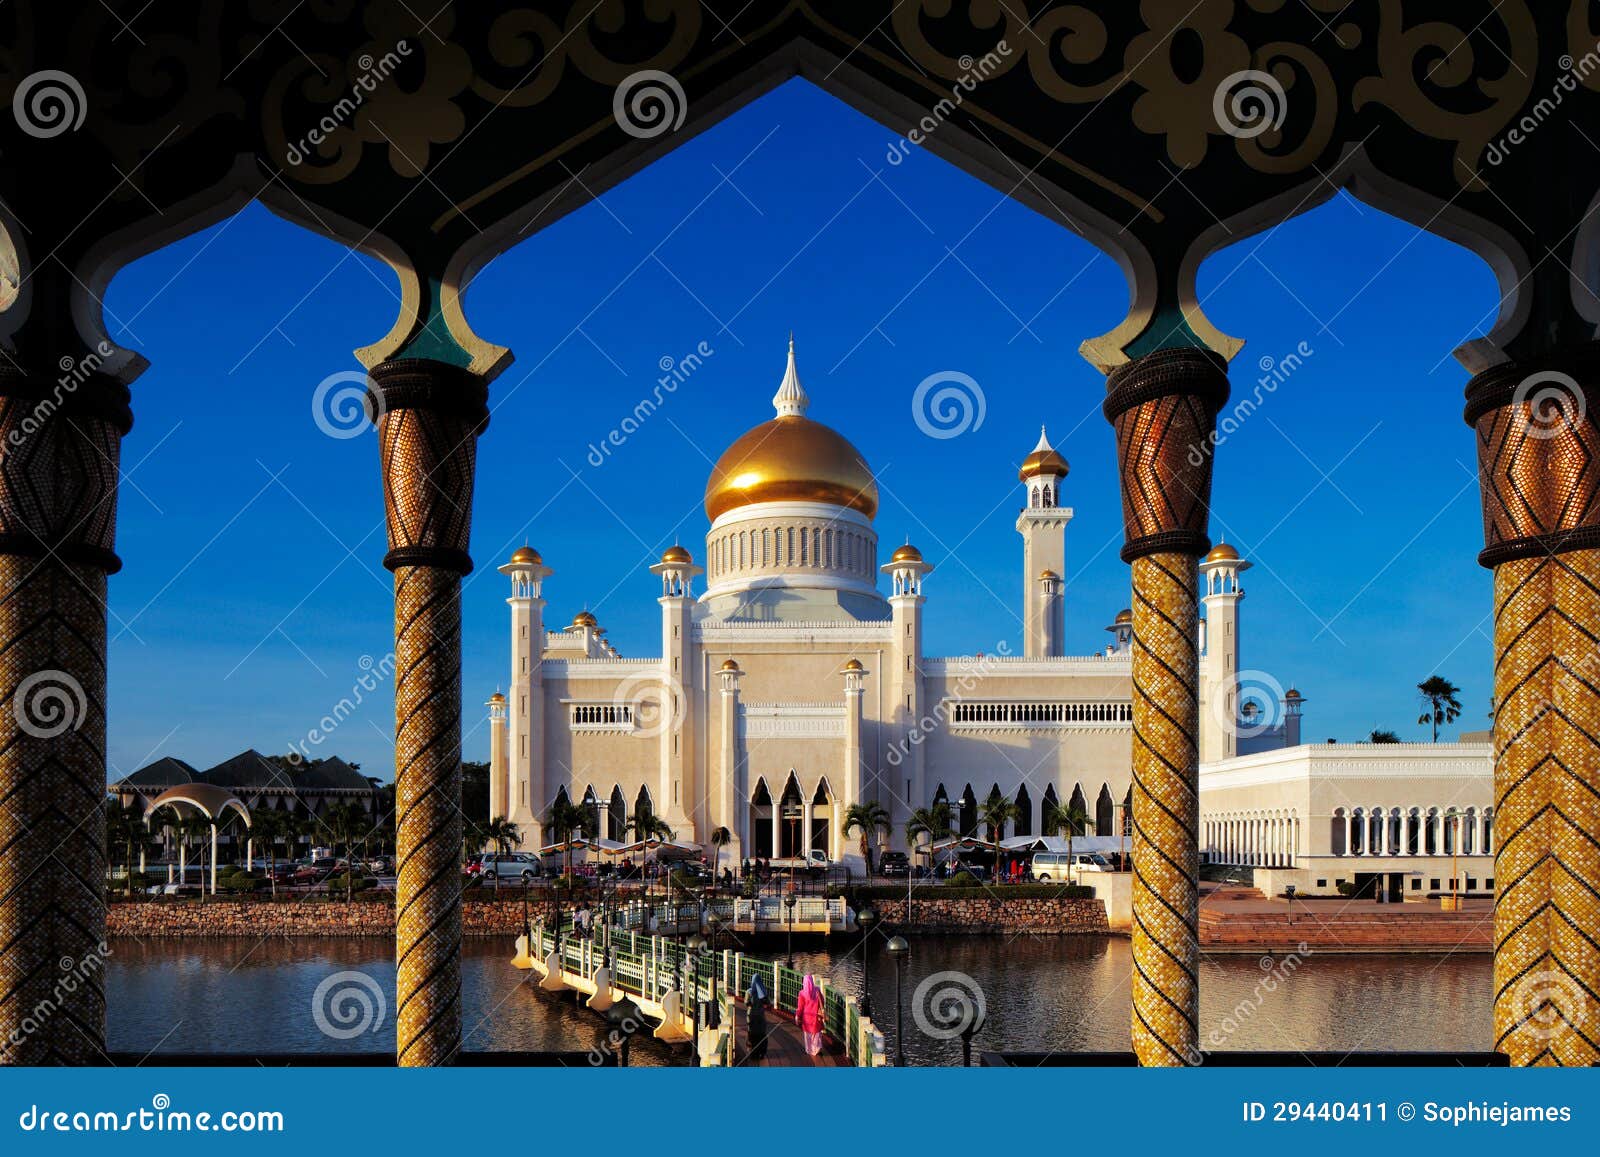 sultan omar ali saifuddien mosque in brunei